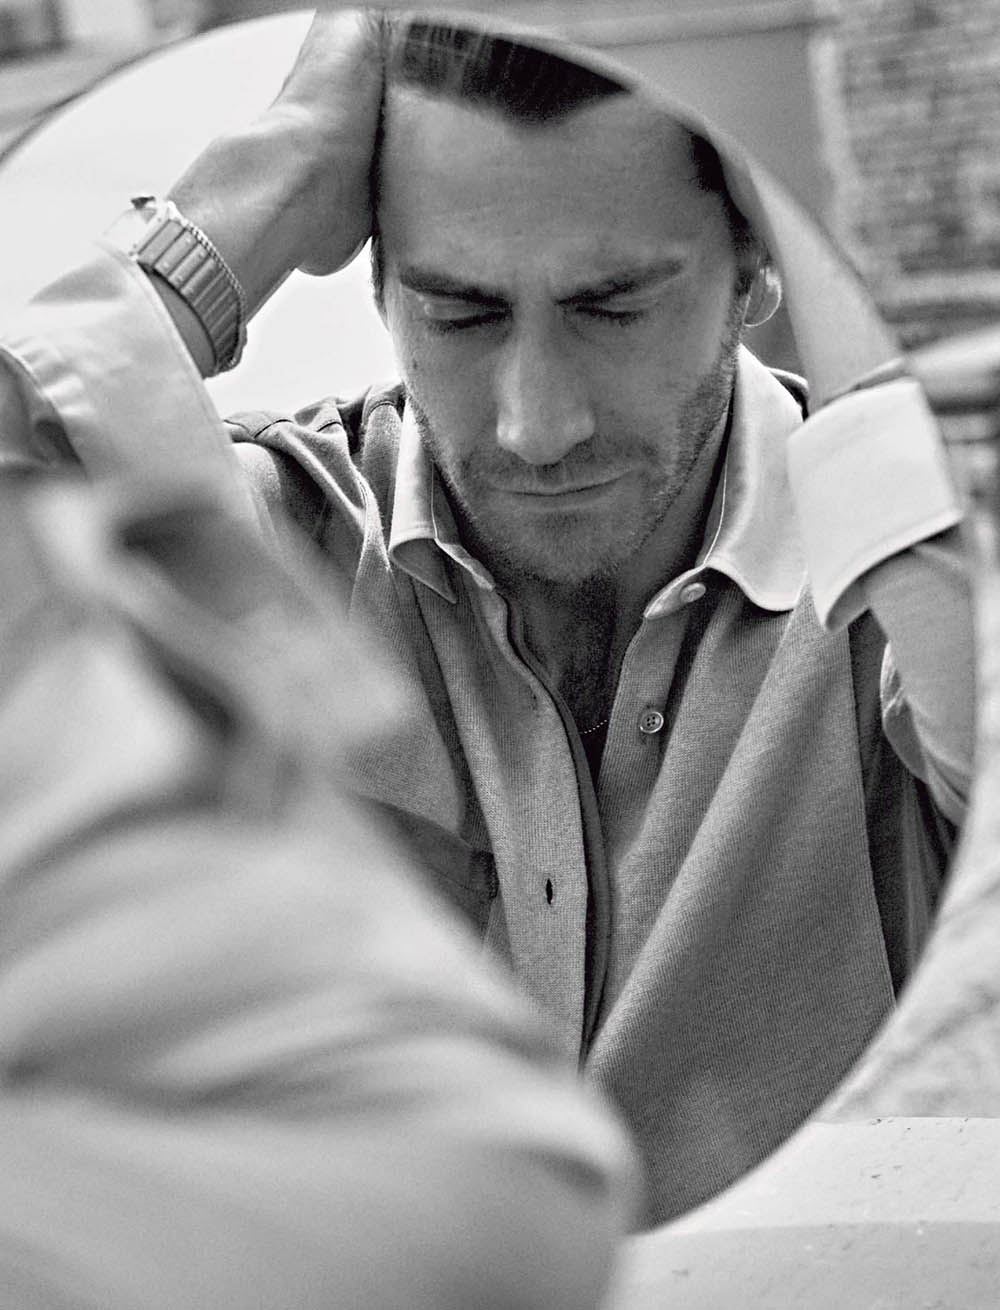 Jake Gyllenhaal covers L’Uomo Vogue July 2019 by Josh Olins